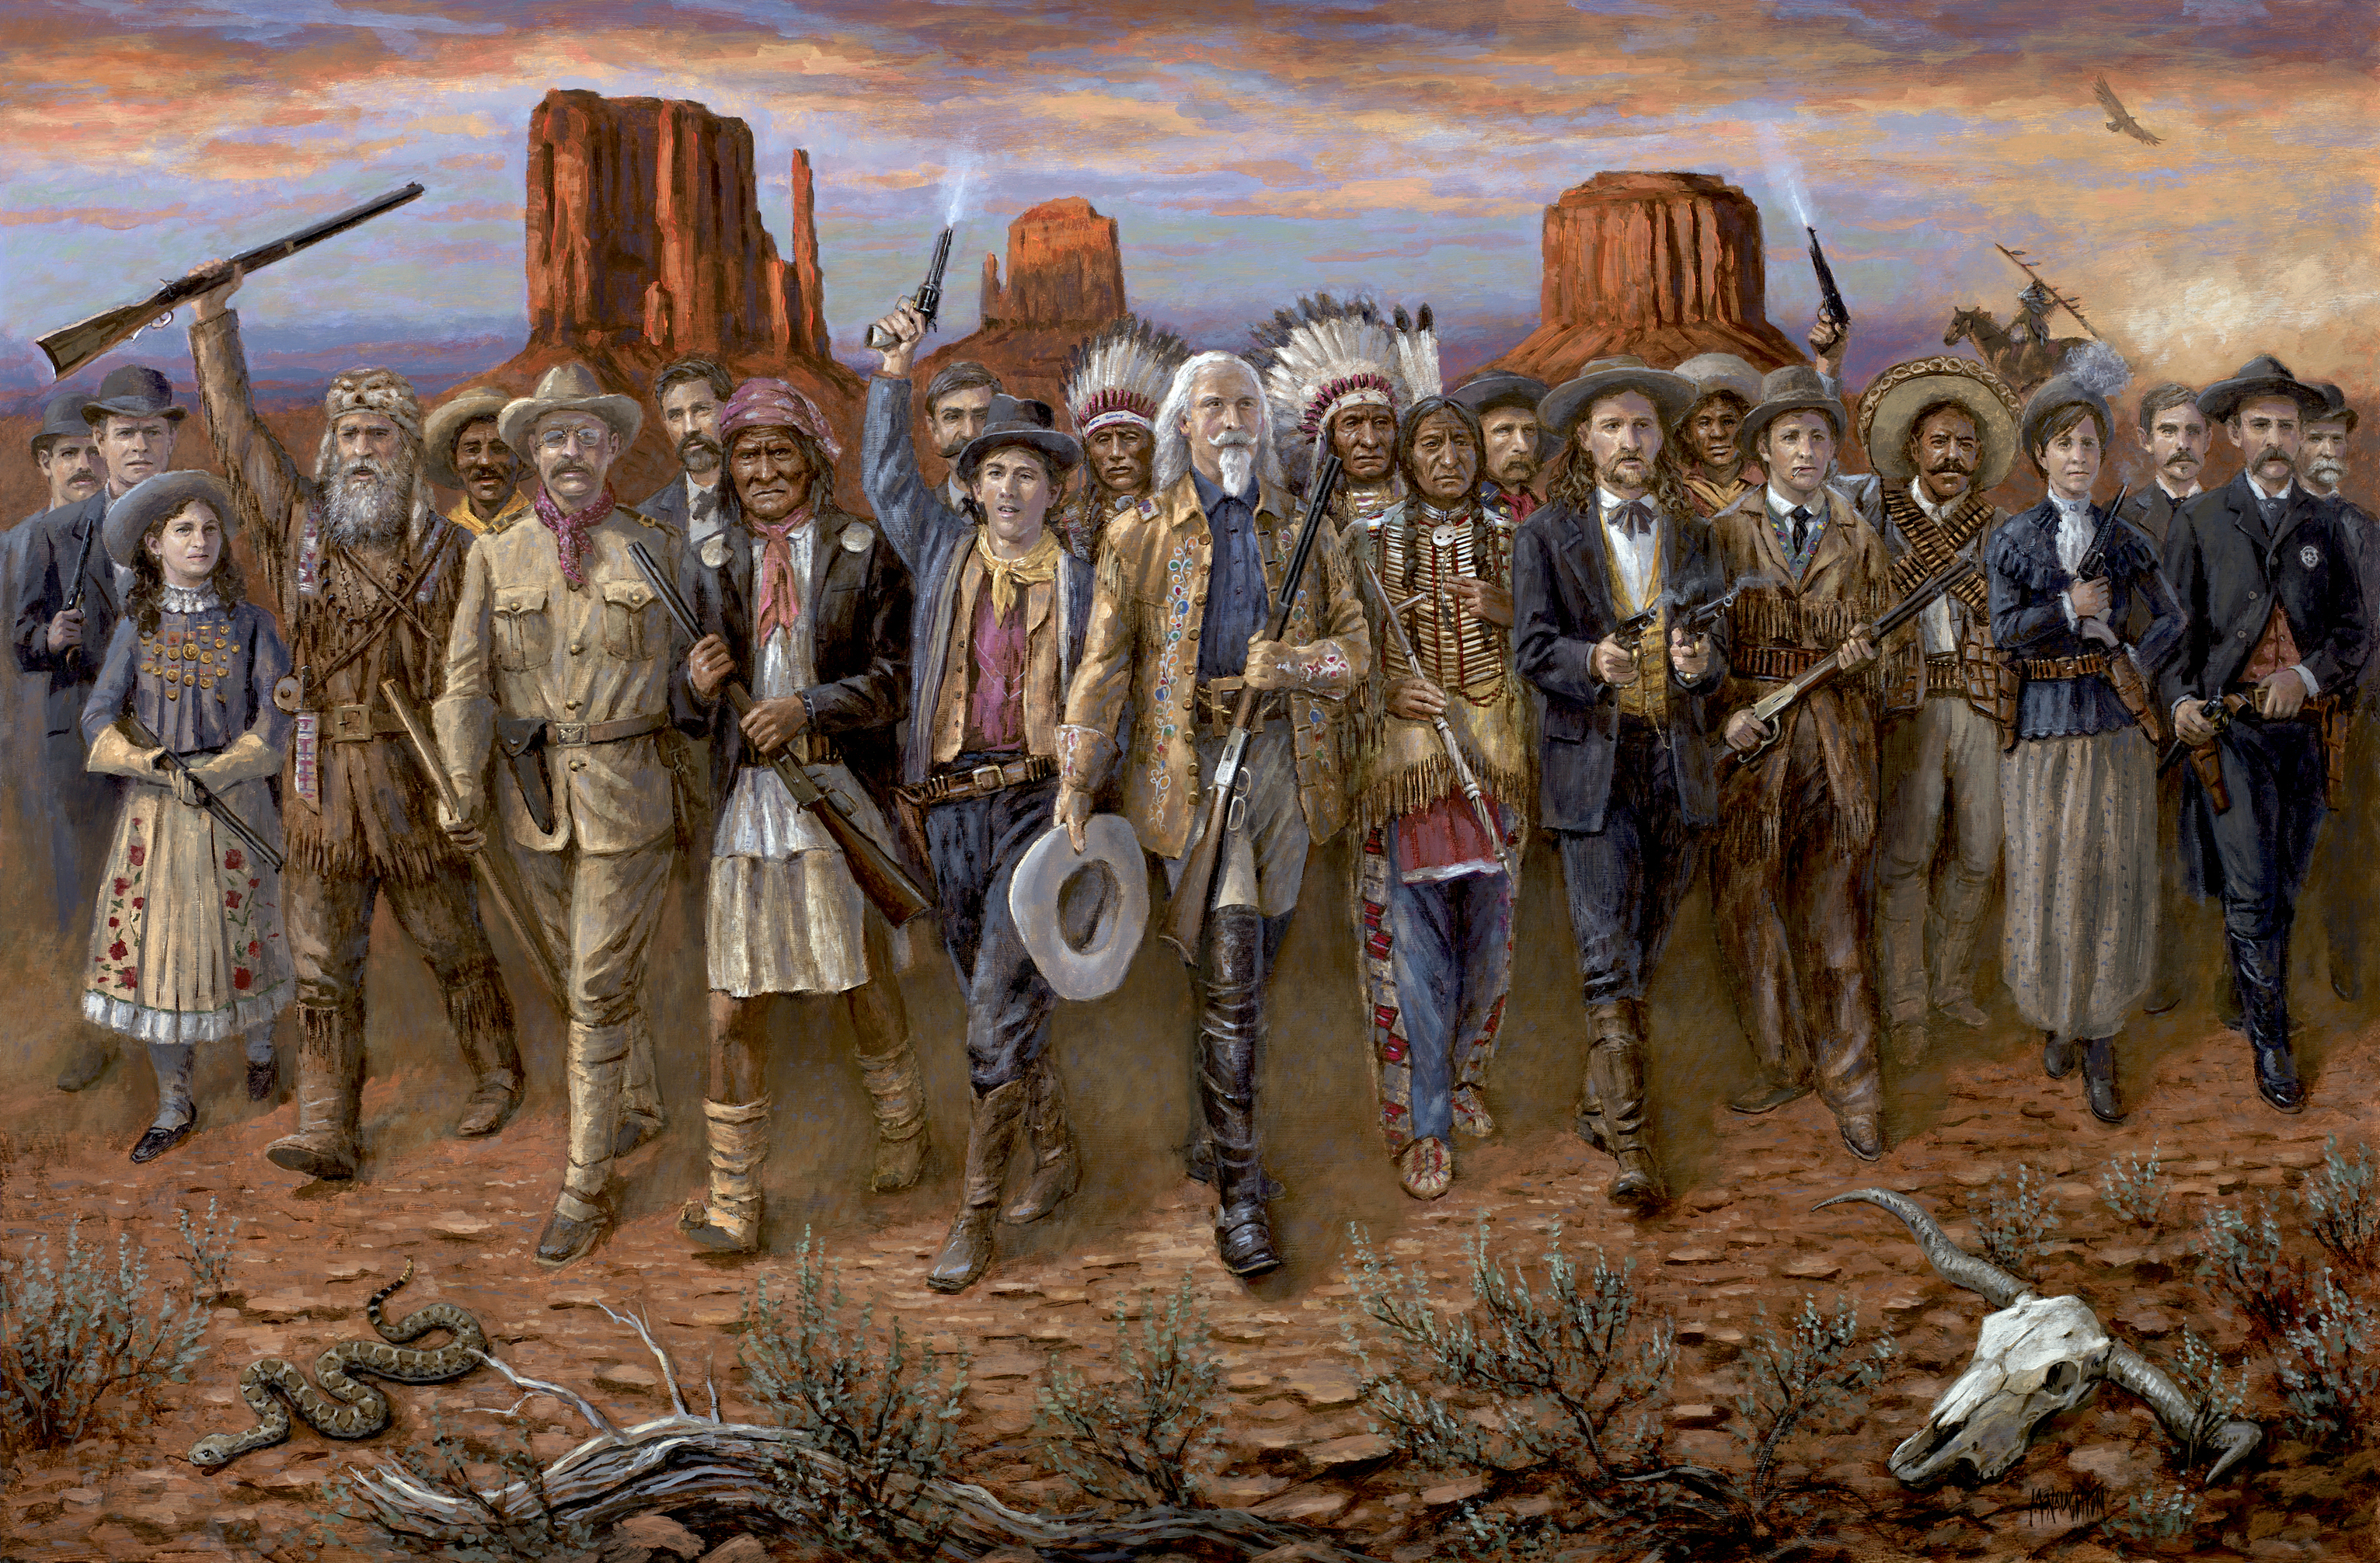 Native American Buffalo Bill Wild Bill Hickok Billy The Kid Sitting Bull Calamity Jane Wyatt Earp Ge 3063x2012